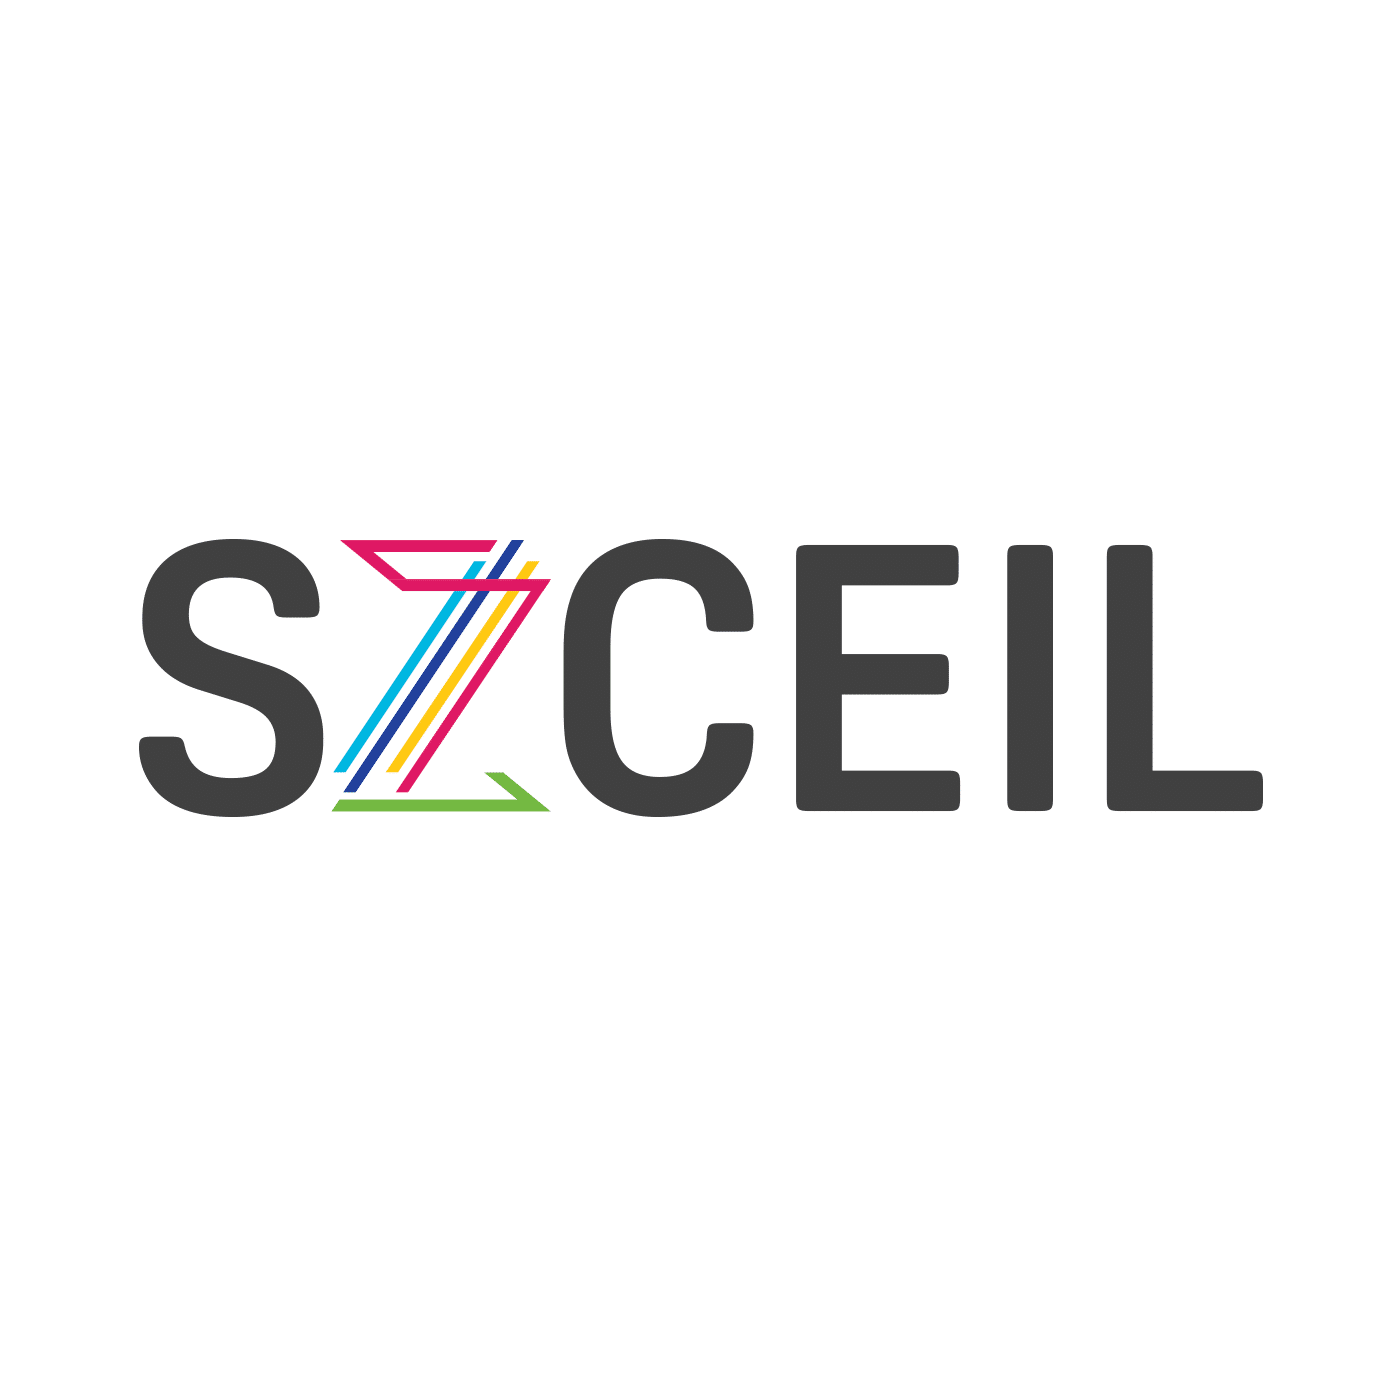 Szceil Logo Design